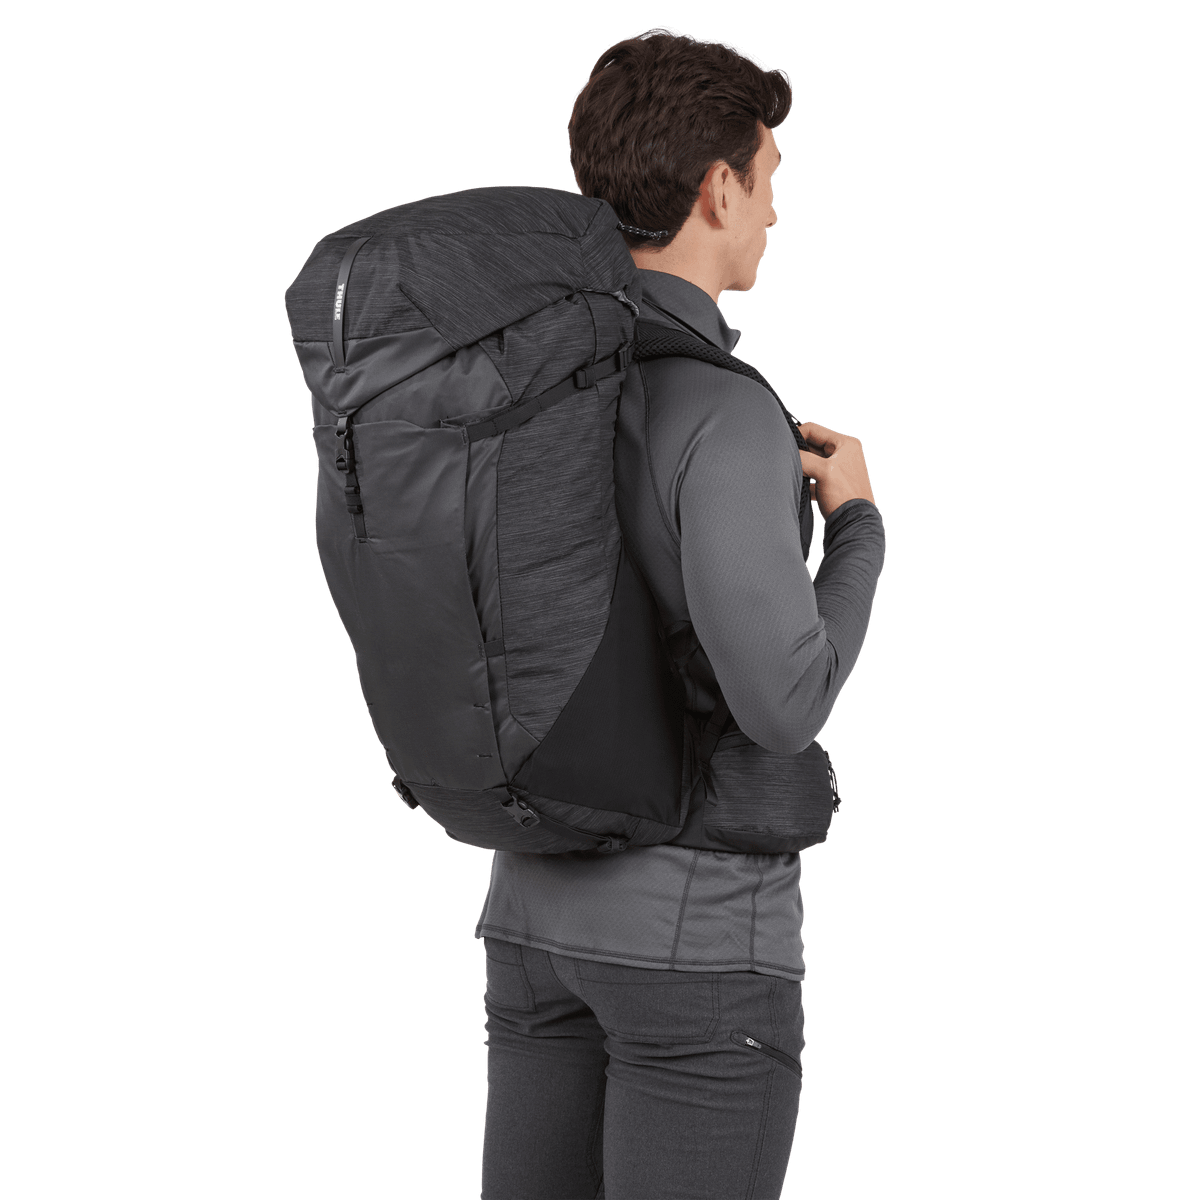 Thule Topio 40L backpacking pack black